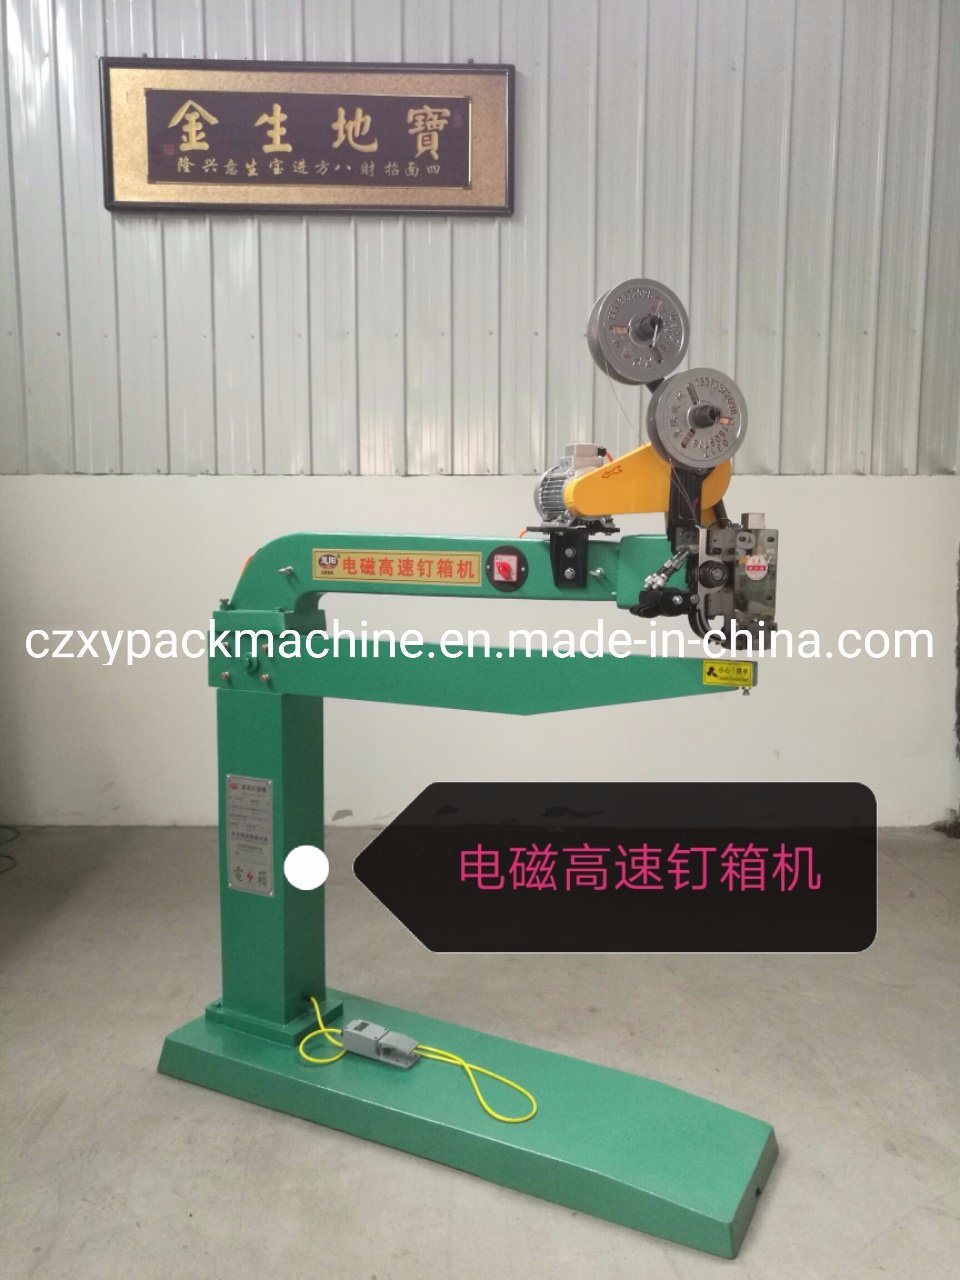 Good Quality Manual Type 1500 Stitcher Machine